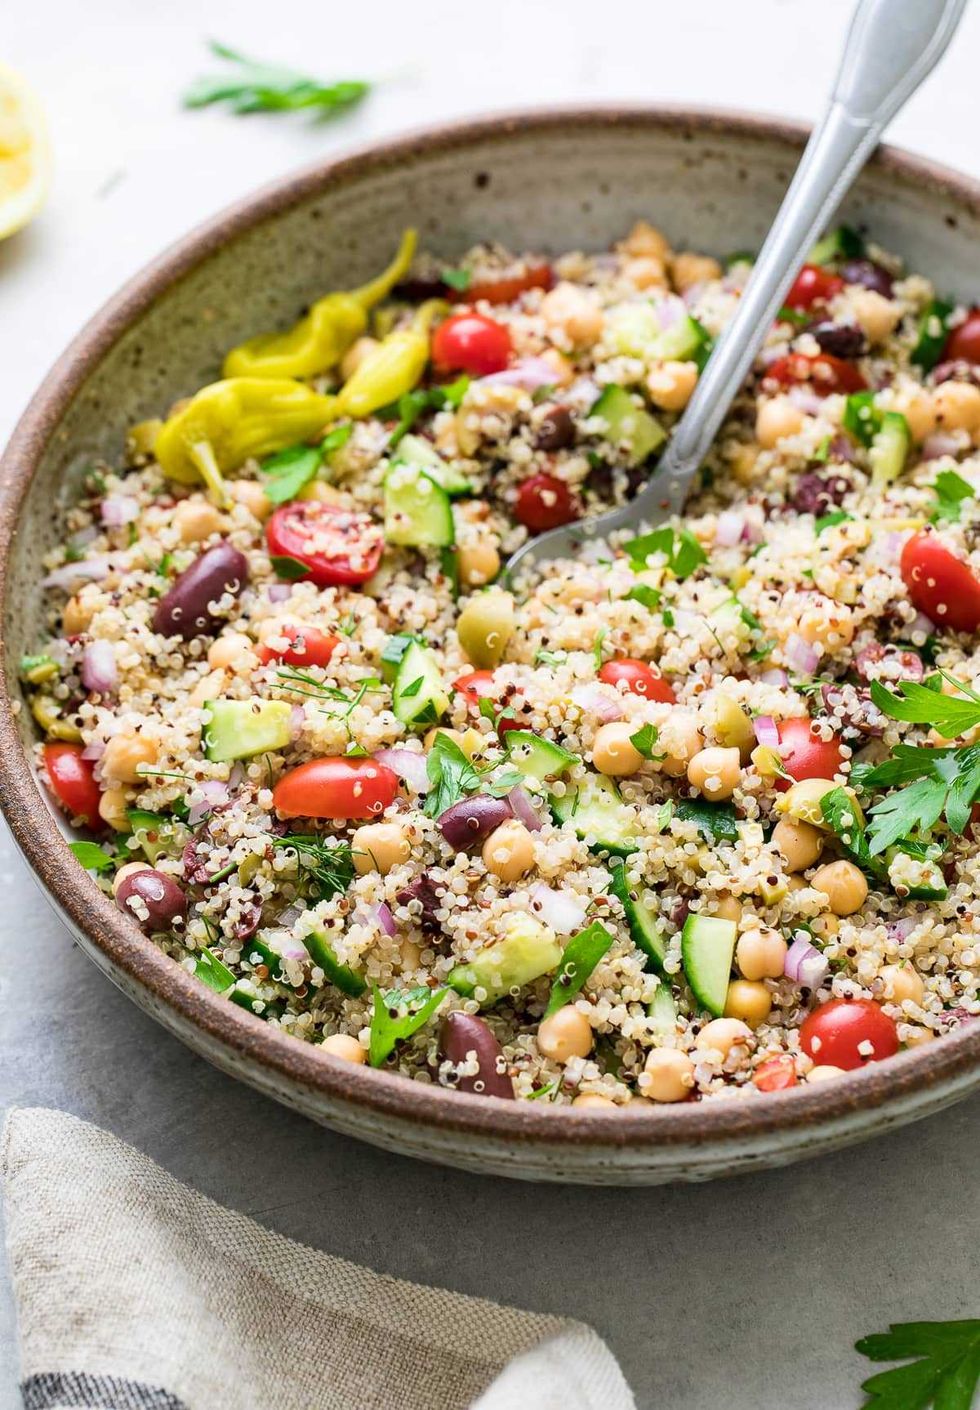 https://hips.hearstapps.com/hmg-prod/images/best-greek-quinoa-salad-recipe-1609769607.jpg?resize=980:*